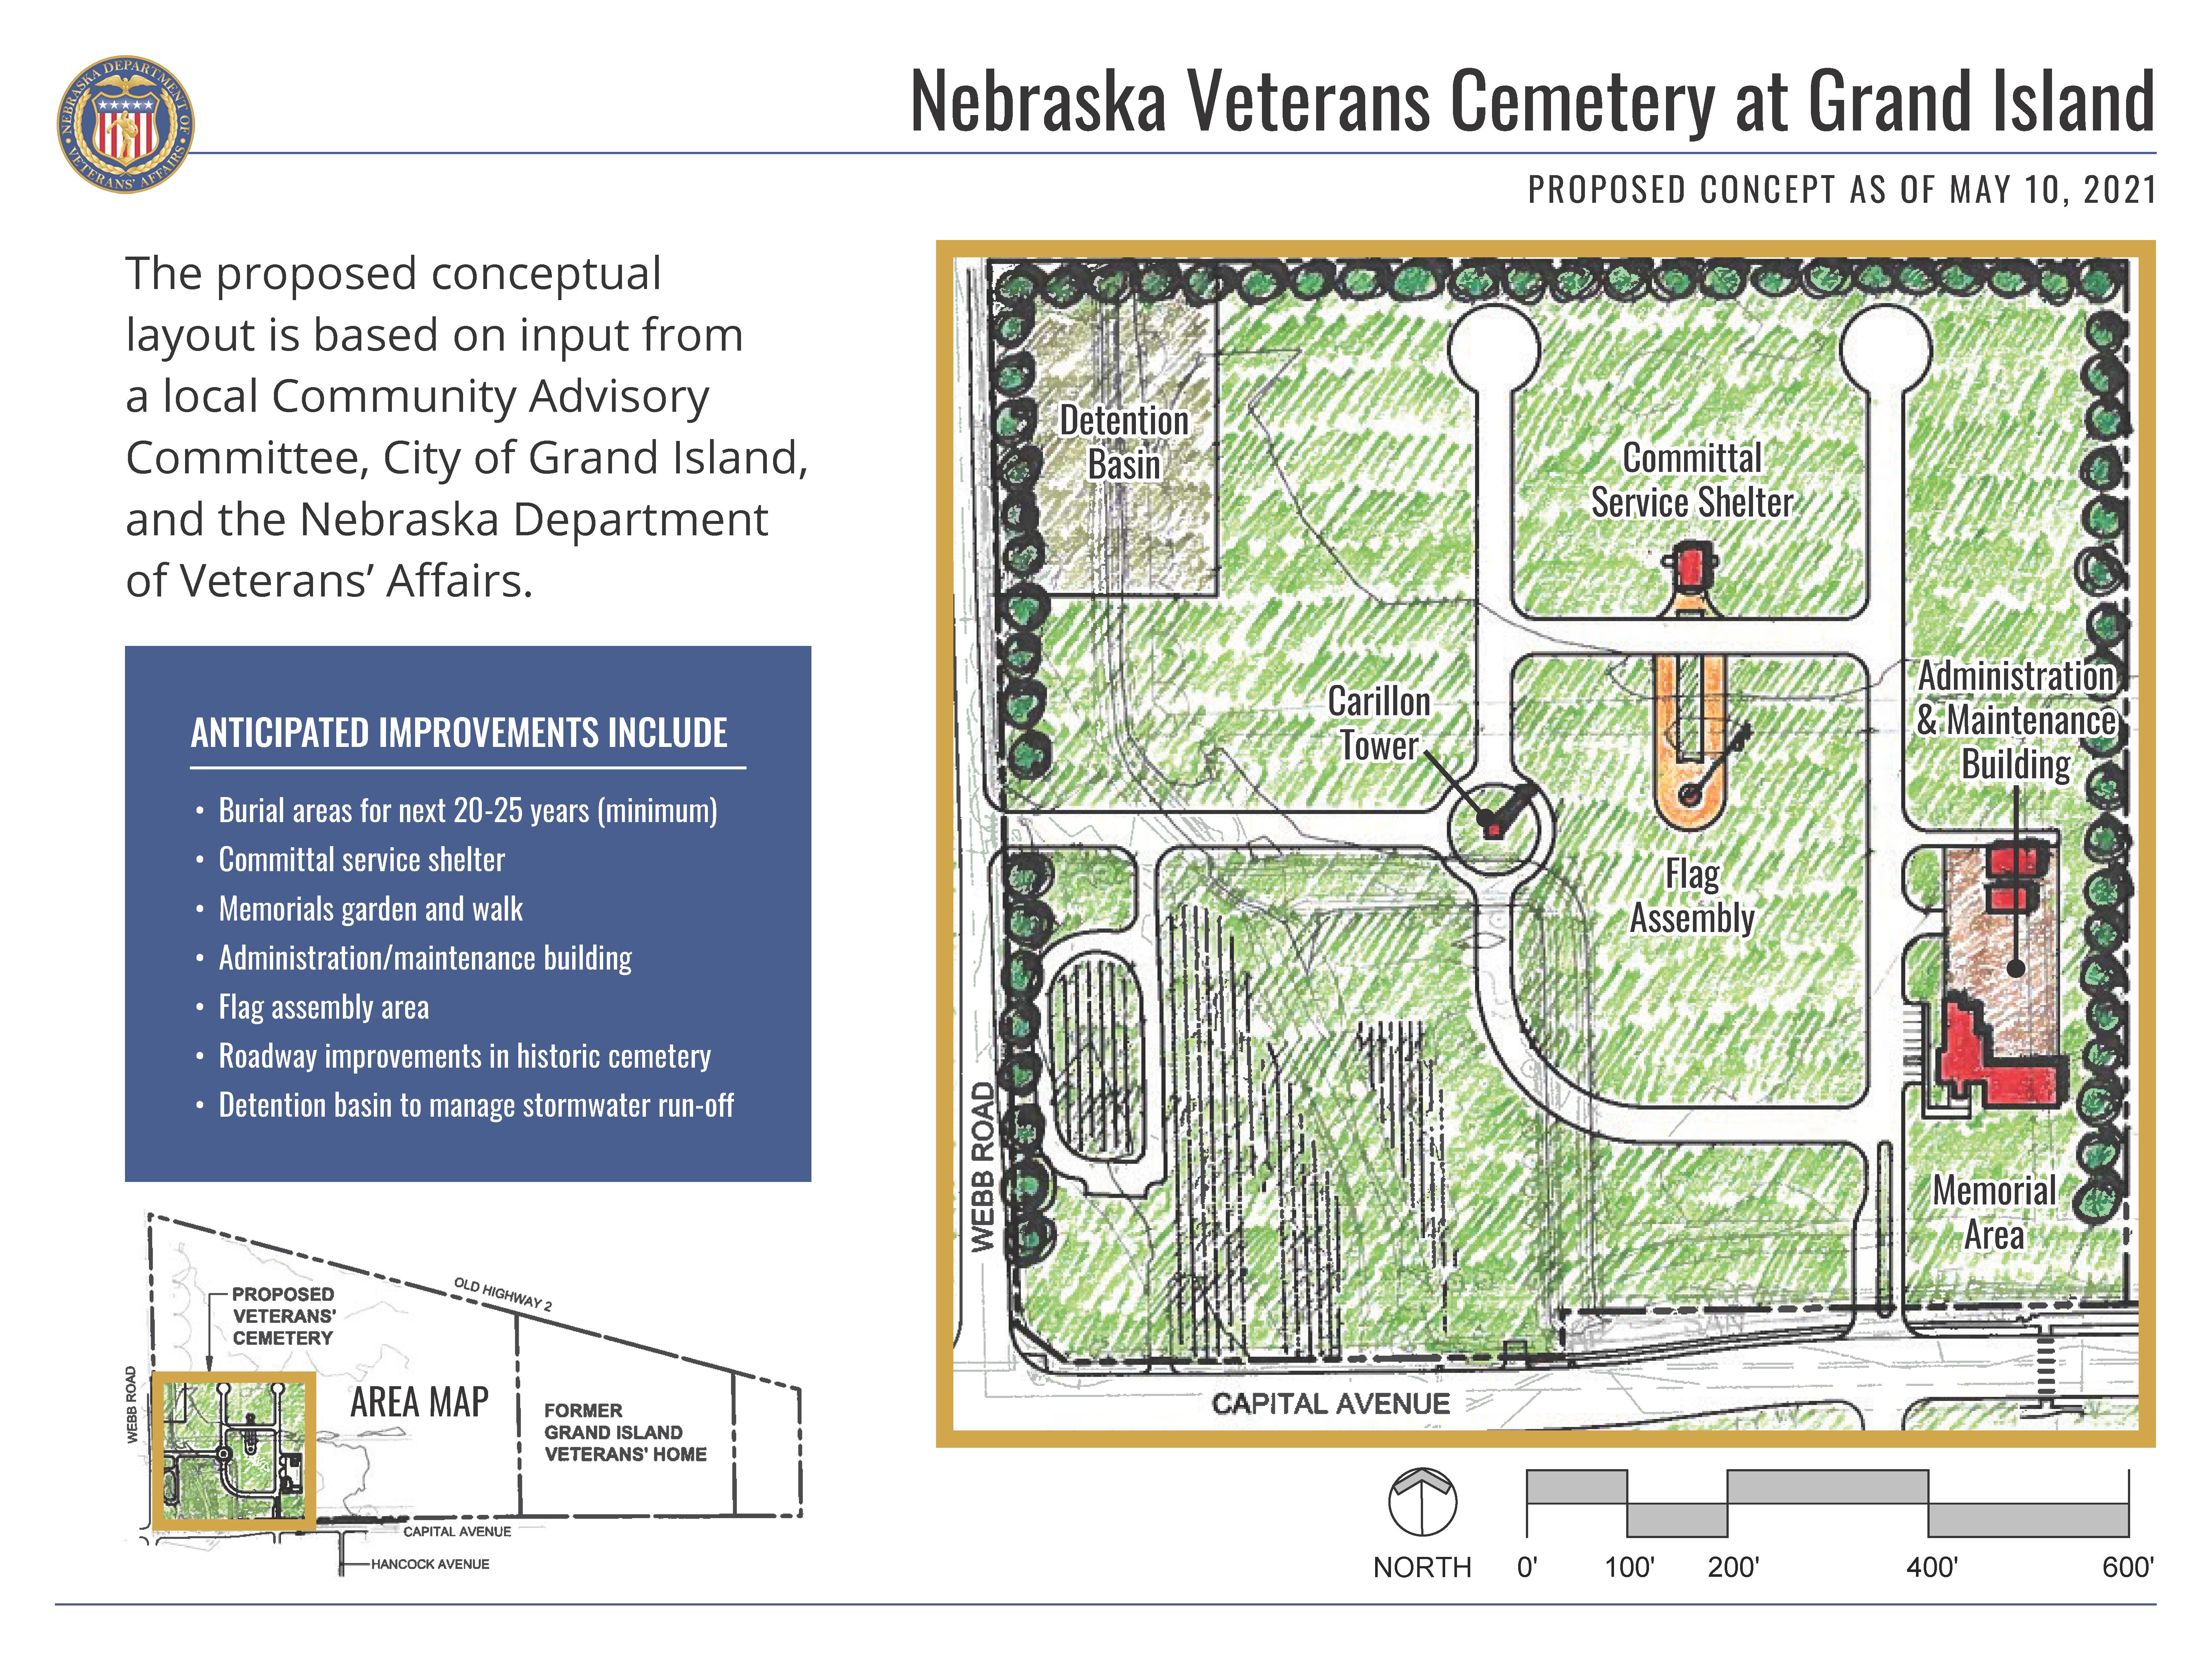 Draft rendering of Nebraska Veterans Cemetery at Grand Island plans